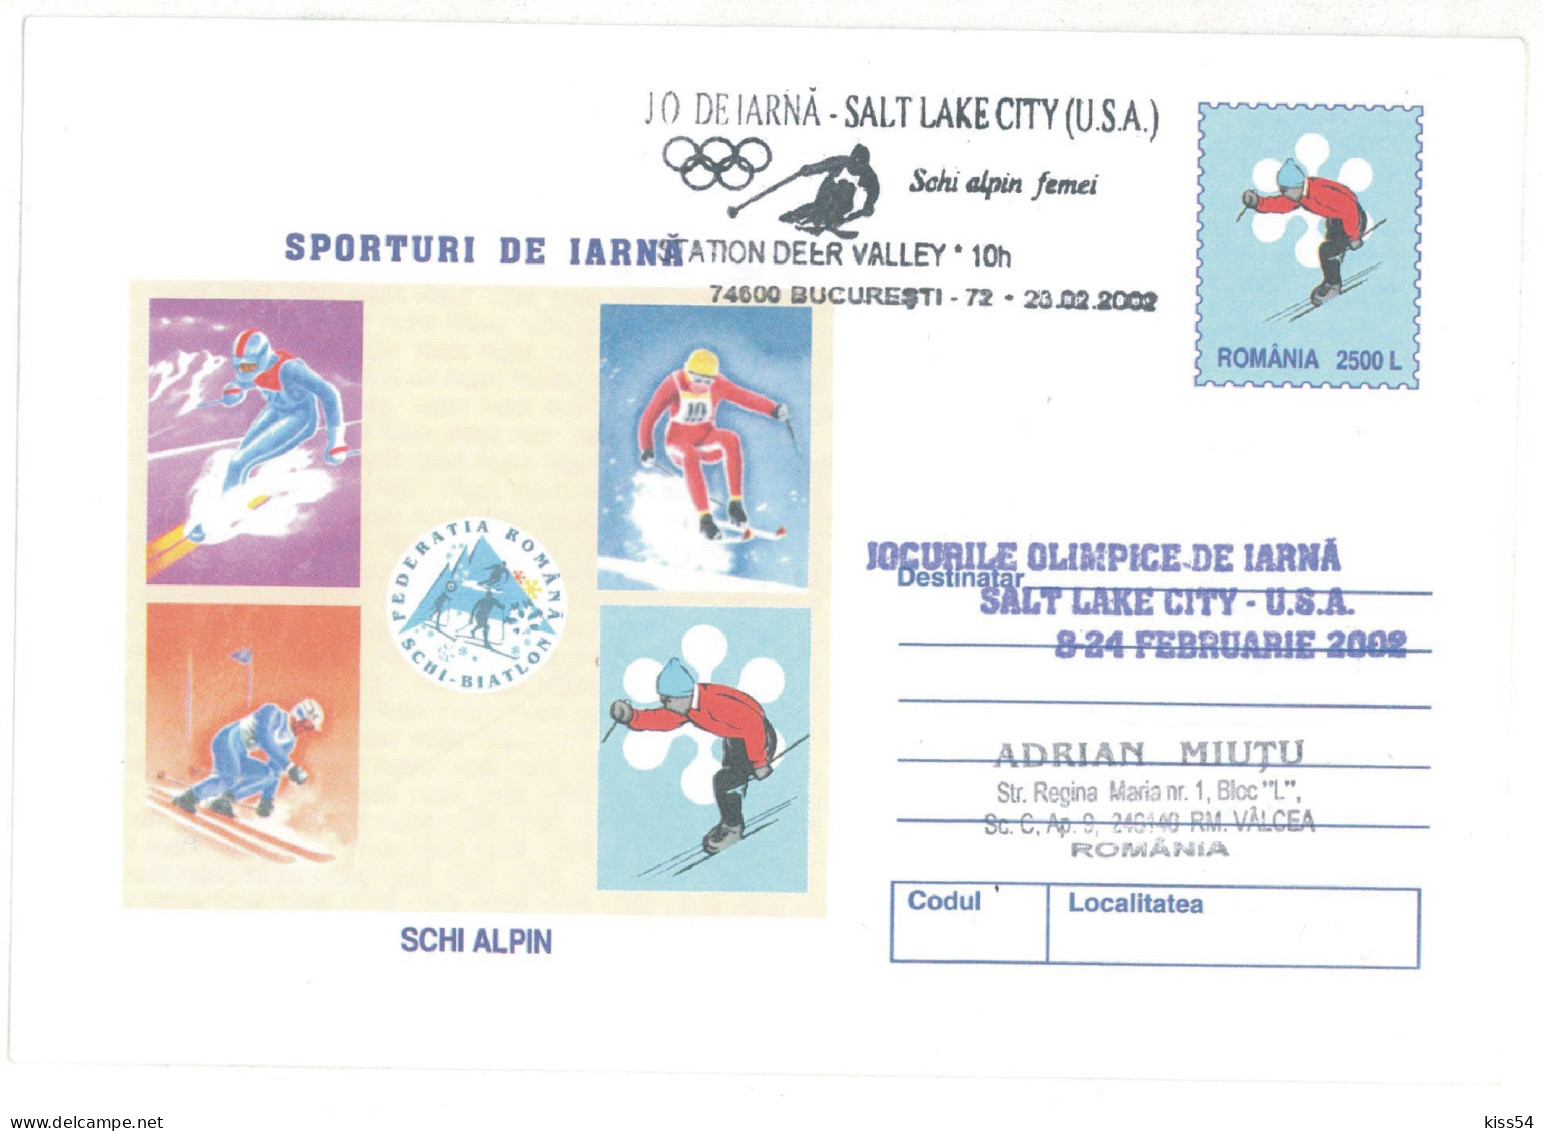 IP 2001 - 0233a U. S. A. SALT LAKE CITY 2002 - SKI Women - Winter Olympic Games - Stationery - Used - 2001 - Winter 2002: Salt Lake City